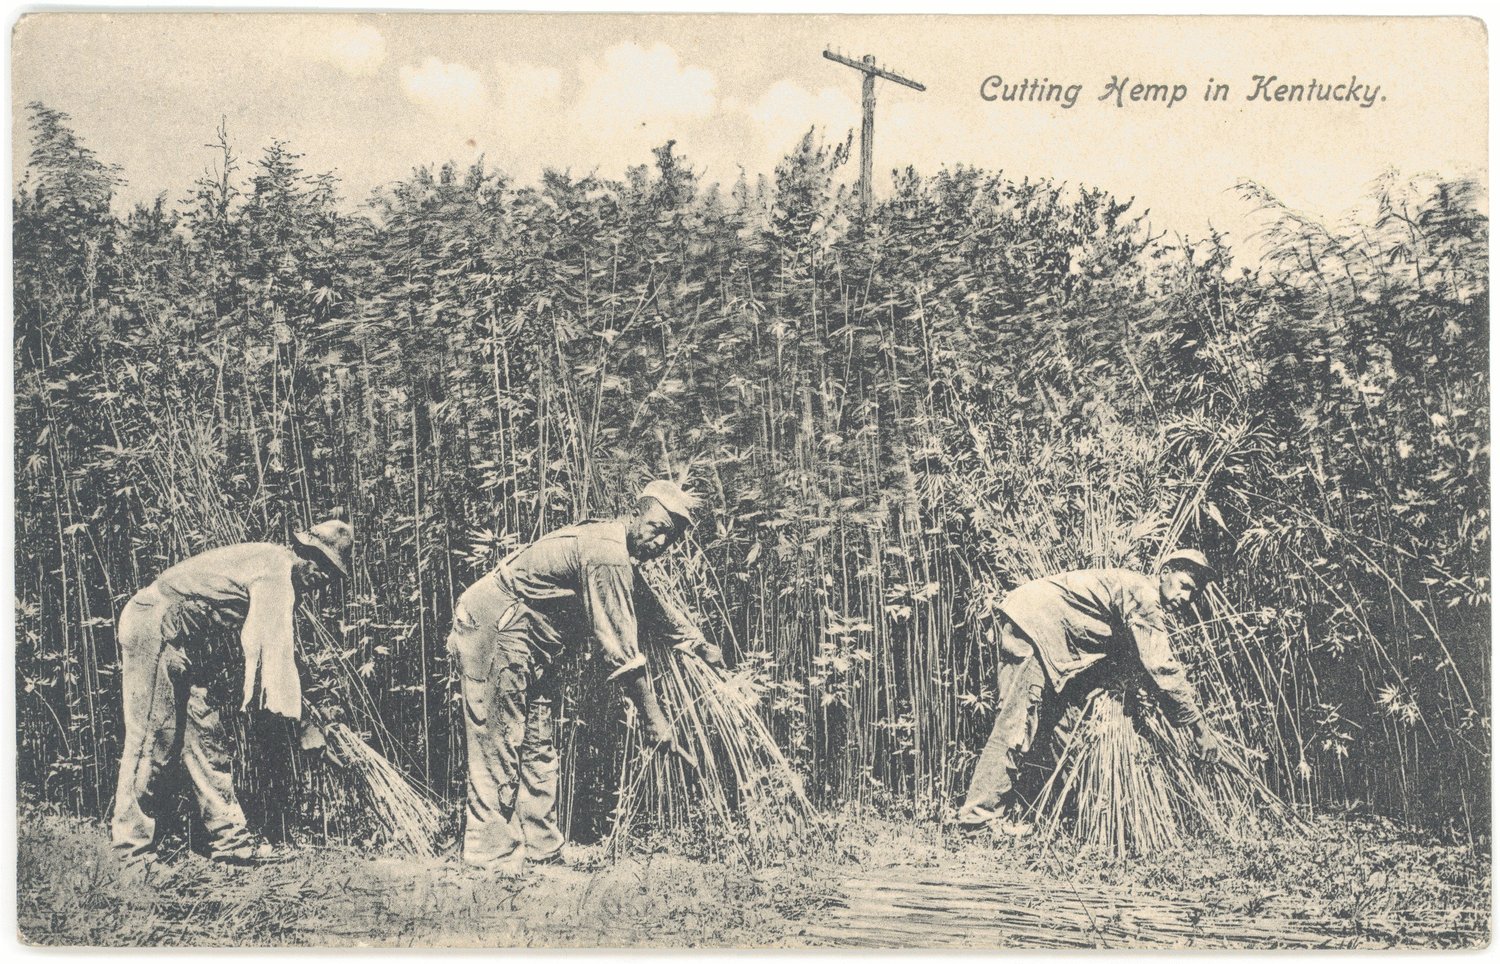 Workers harvesting hemp in Kentucky, 1895